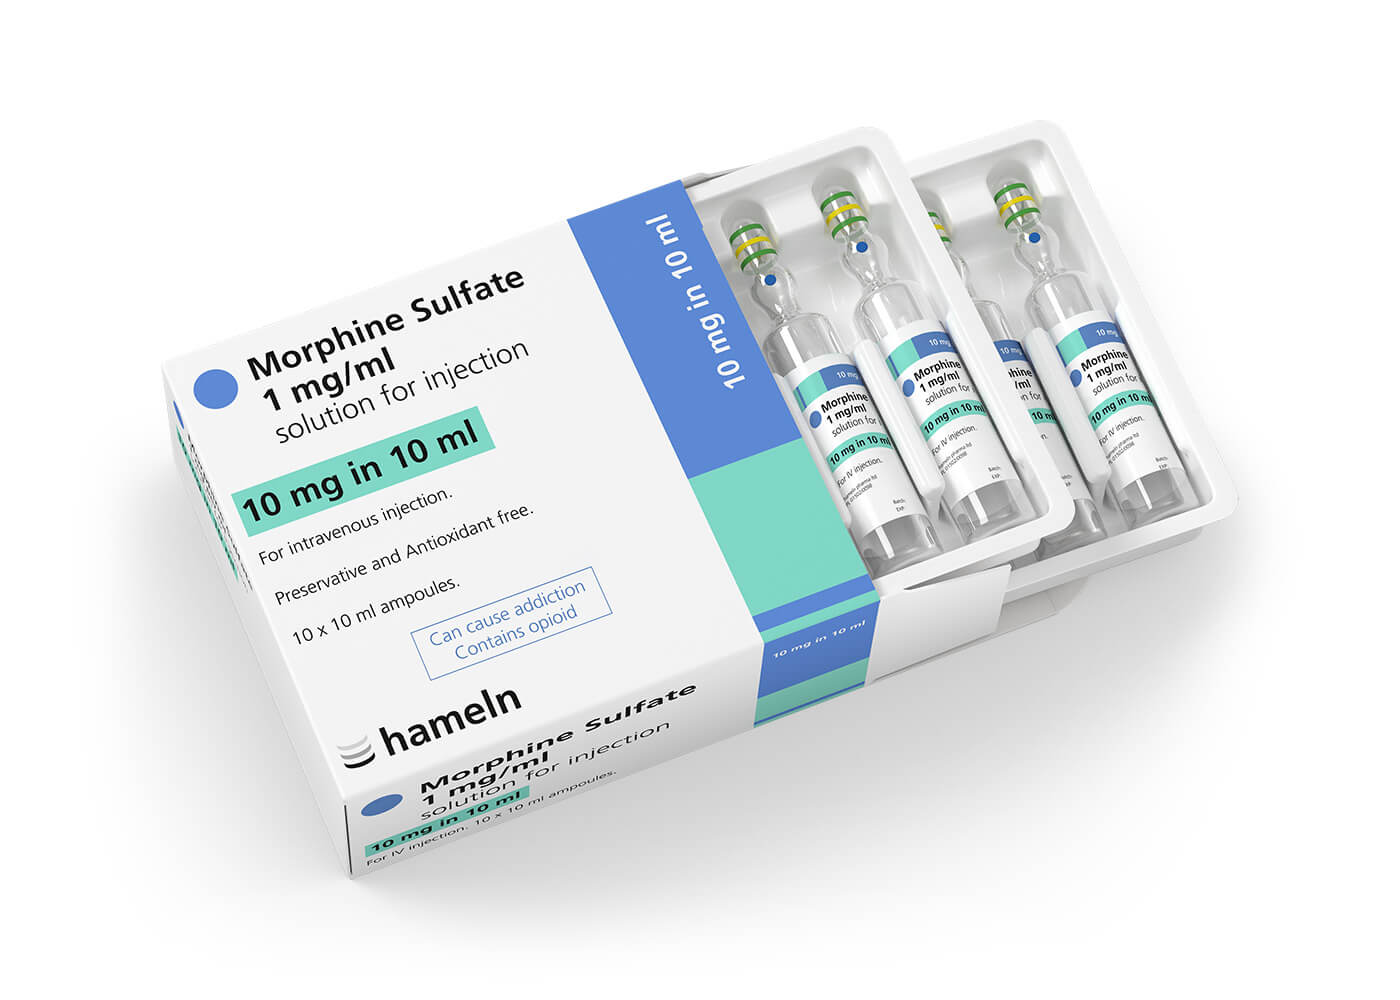 Morphine_UK_10_mg-ml_in_10_ml_Pack-Amp_10St_2020-35